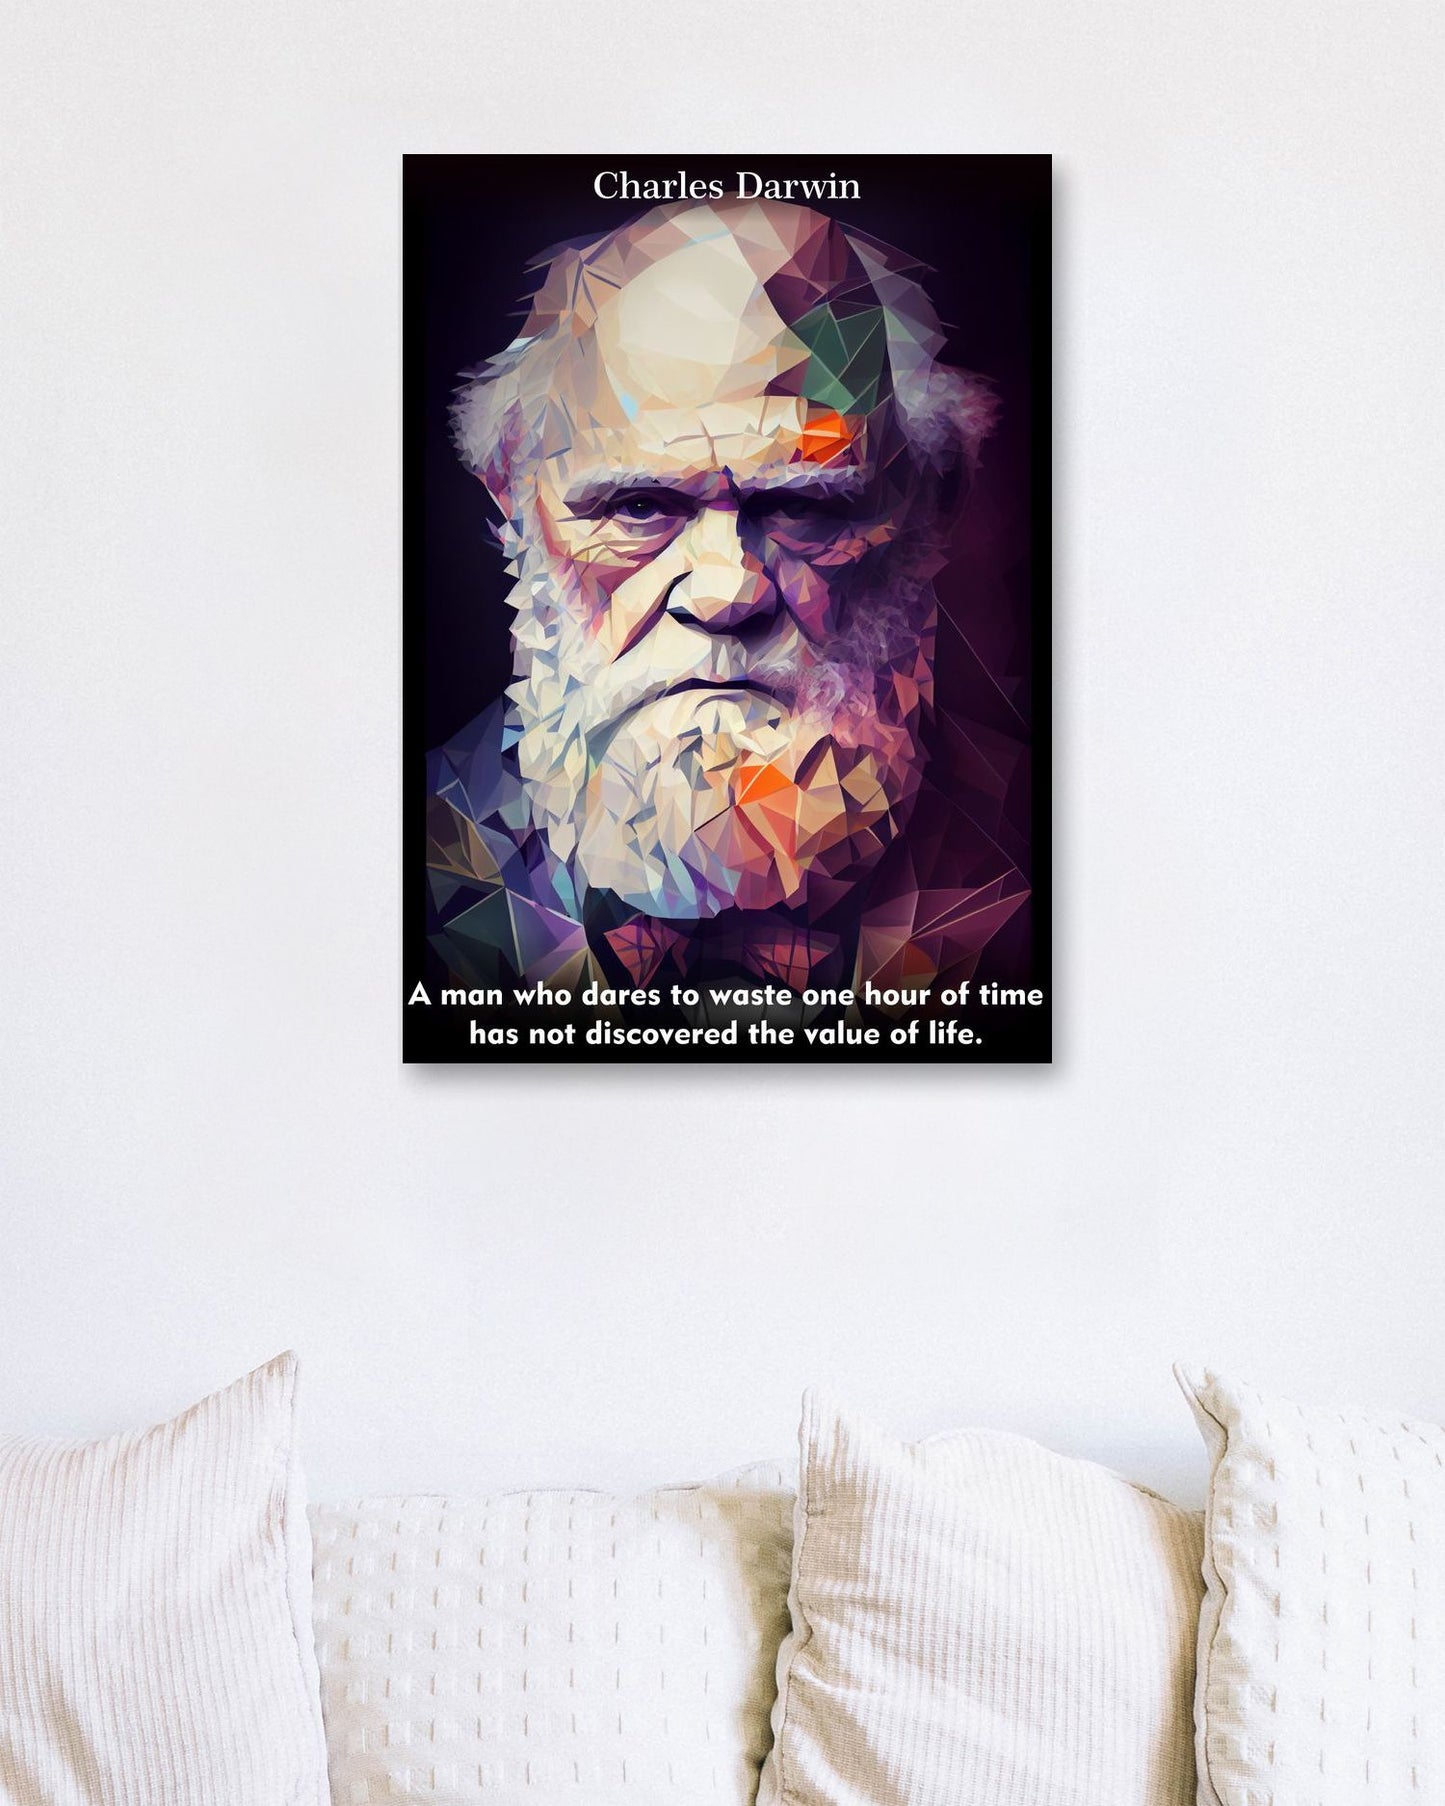 Charles Darwin Quotes - @WpapArtist